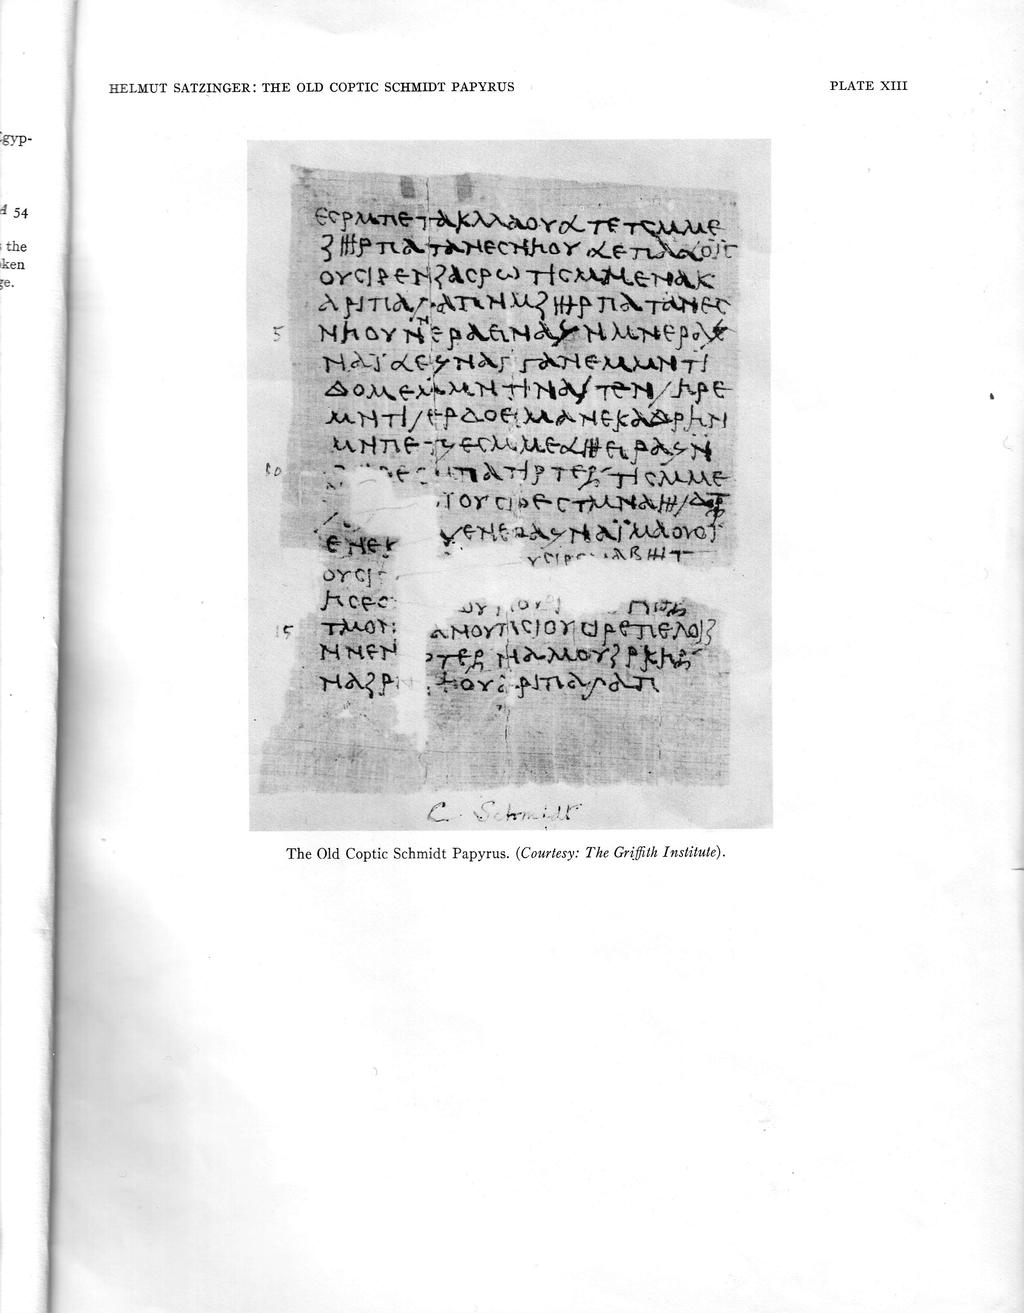 HT'LIf,UT SATZINGER: THE OLD COPTIC SCIIMIDT PAPYRUS PLATE XIII